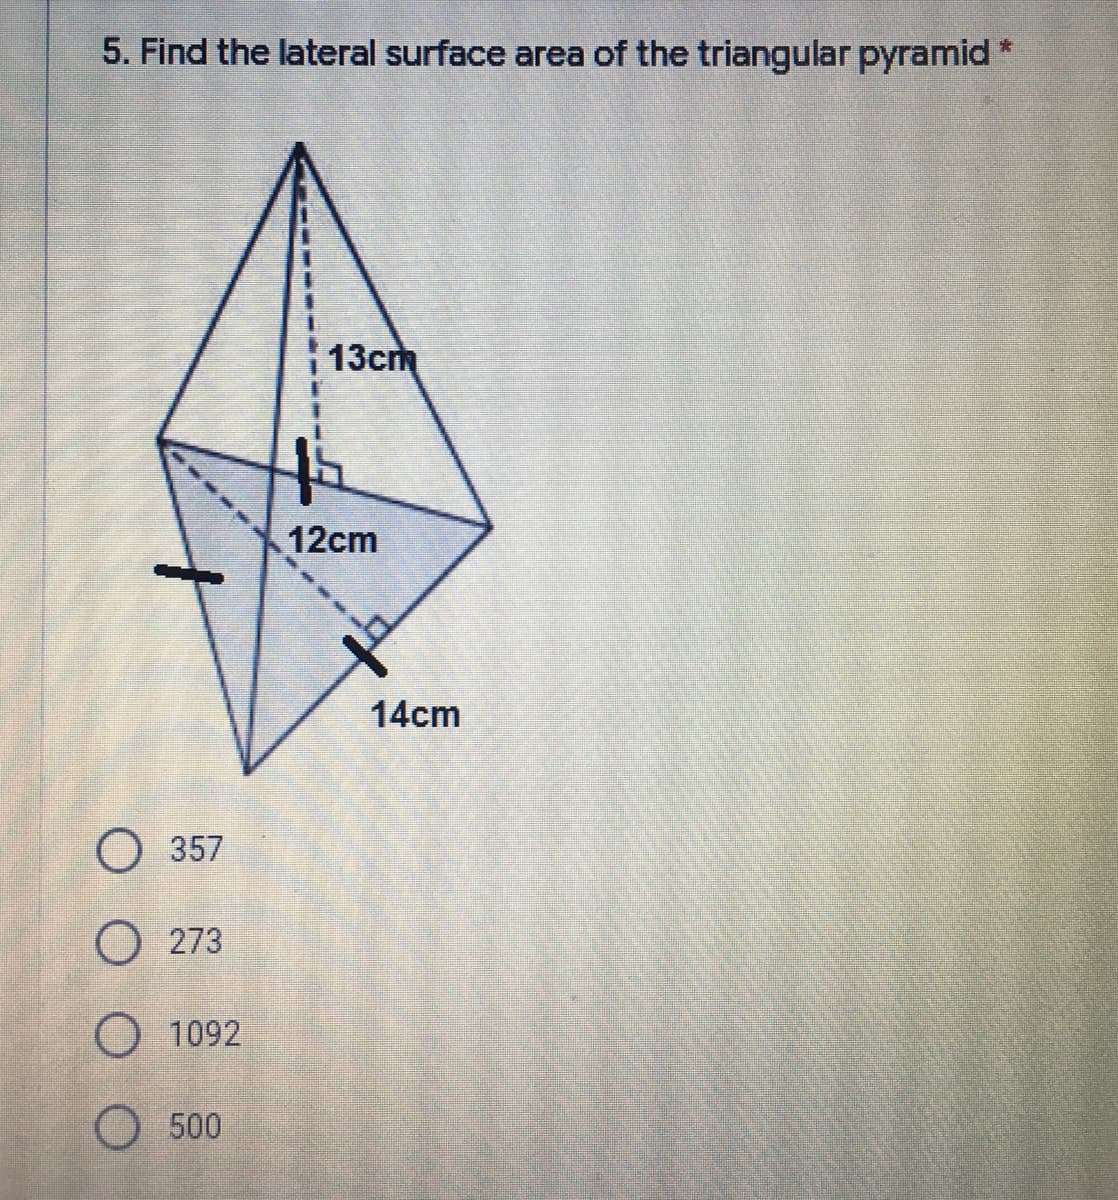 5. Find the lateral surface area of the triangular pyramid
*:
13cm
12cm
14cm
O 357
O 273
O 1092
500
